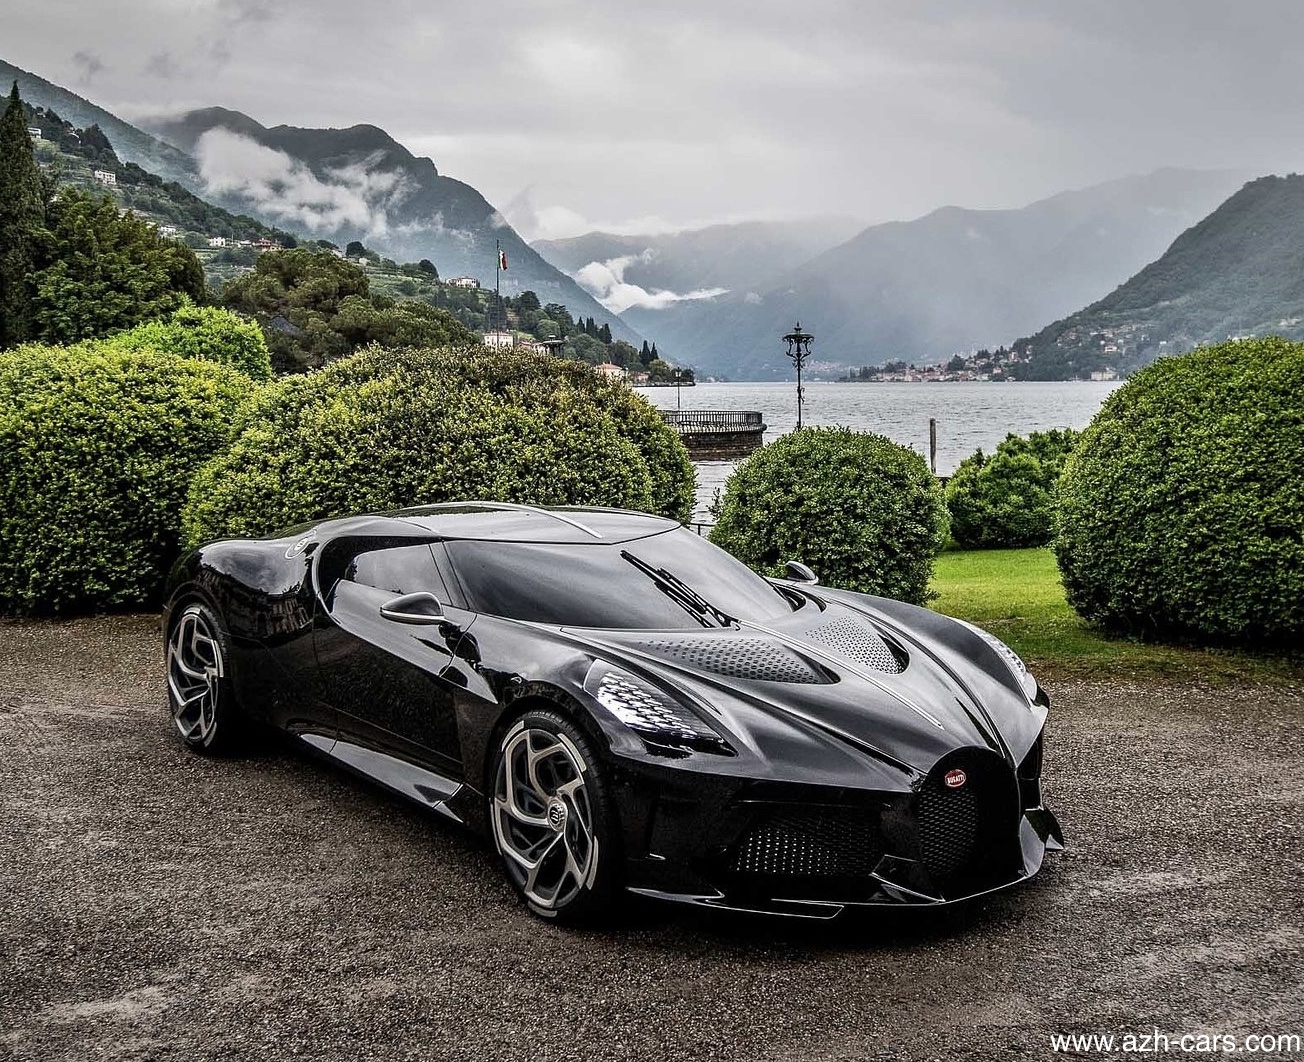 Bugatti La Voiture Noire 2019 - AZH-CARS